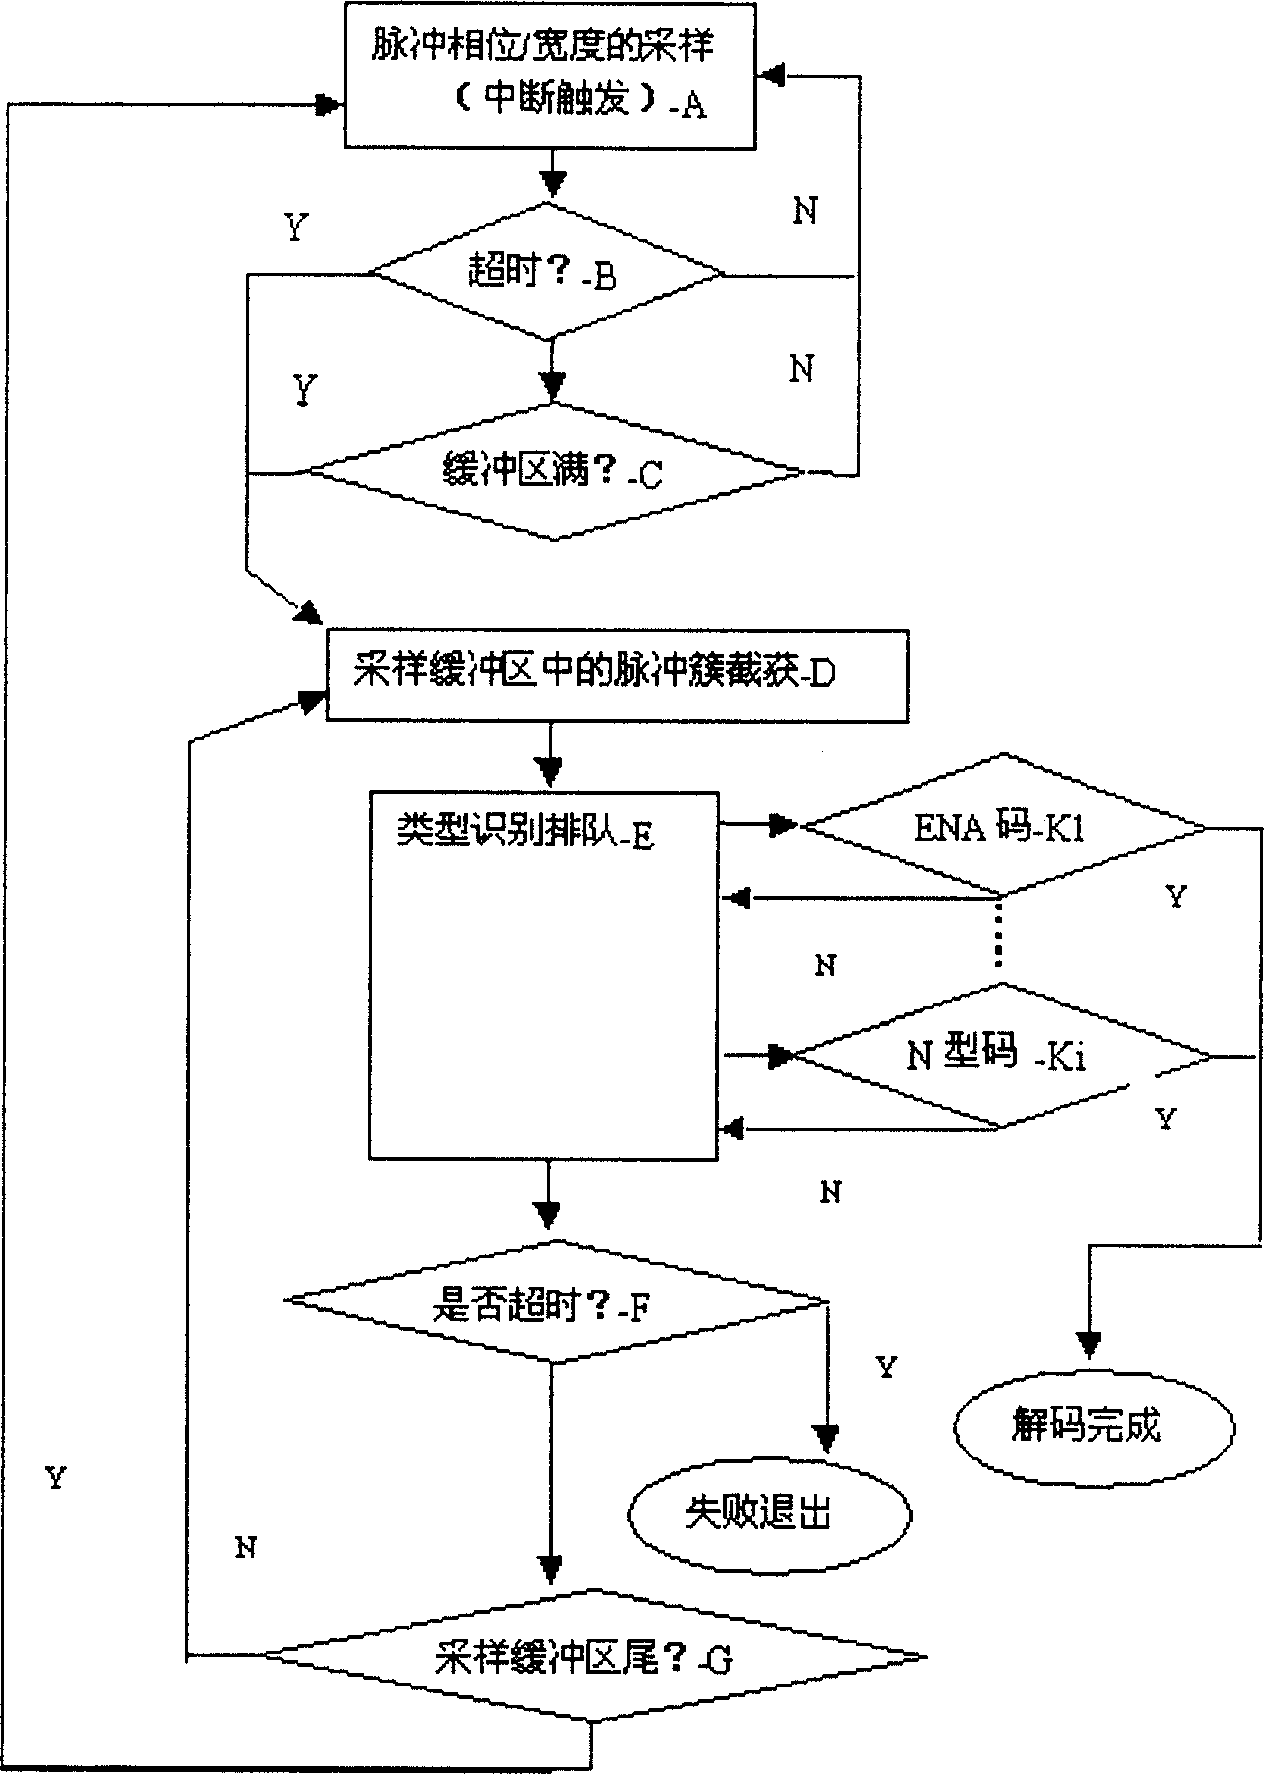 A 1D bar code decoding method